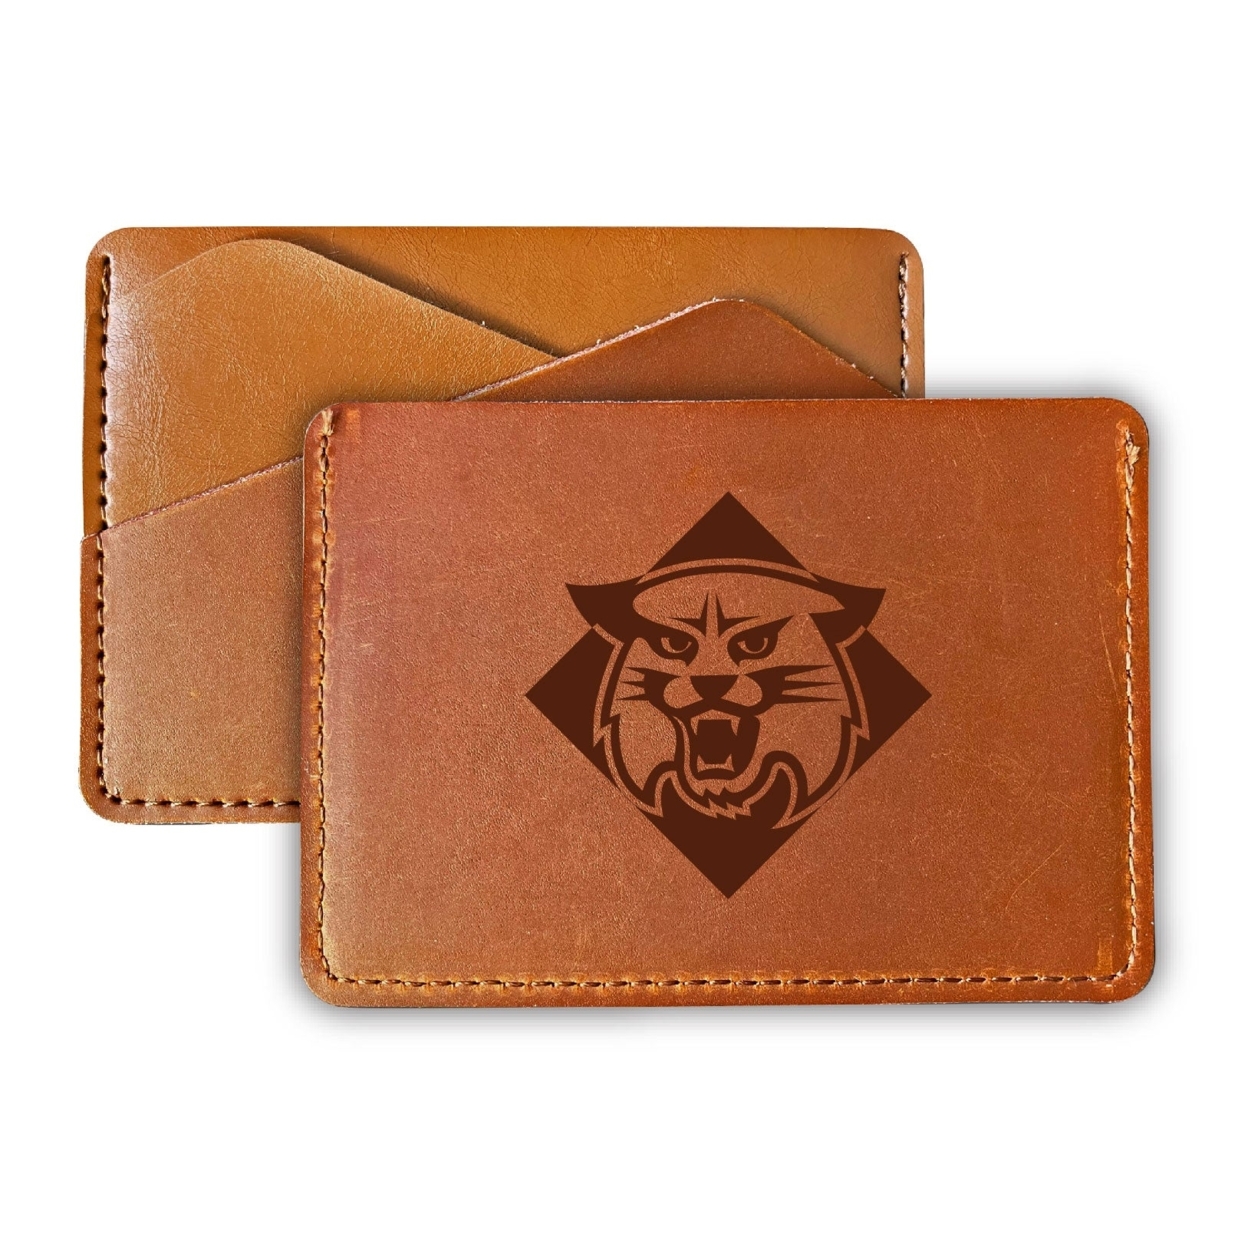 Davidson College College Leather Card Holder Wallet